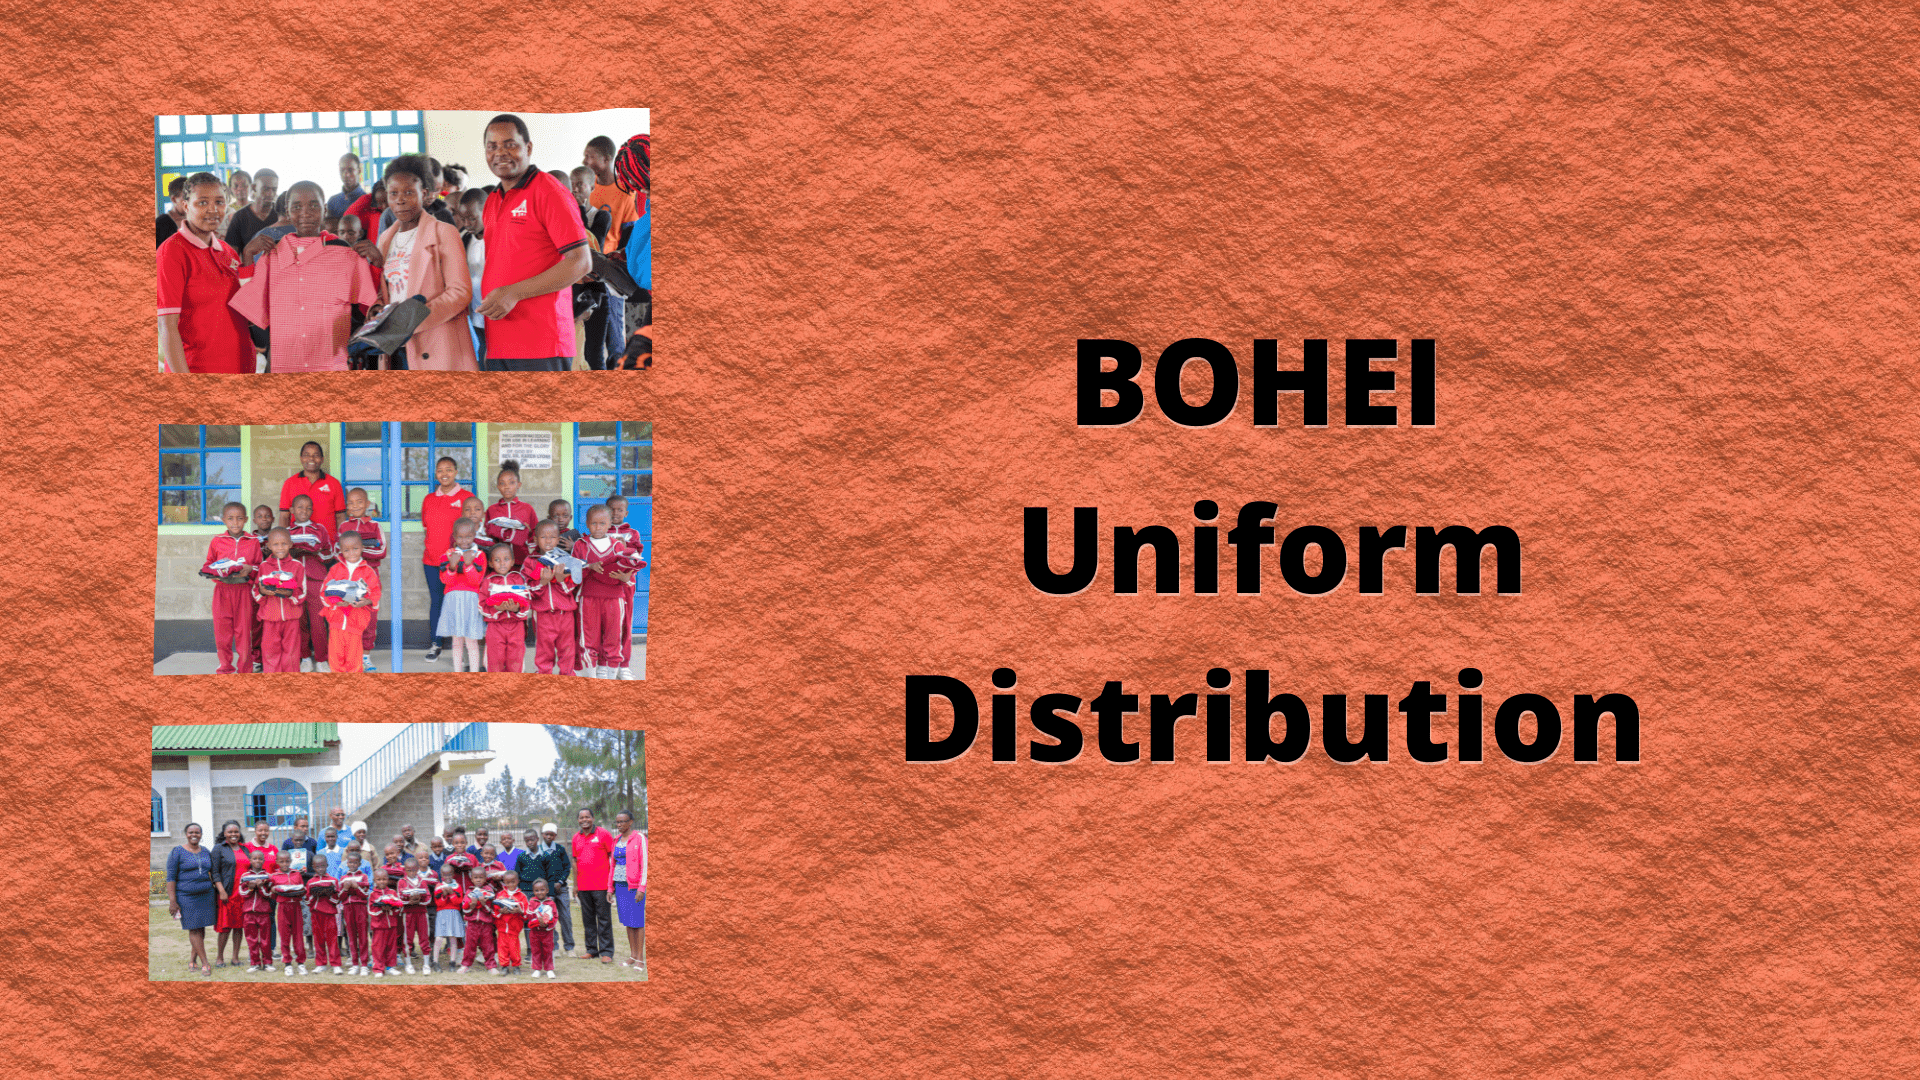 BOHEI Assists Children with School Uniforms